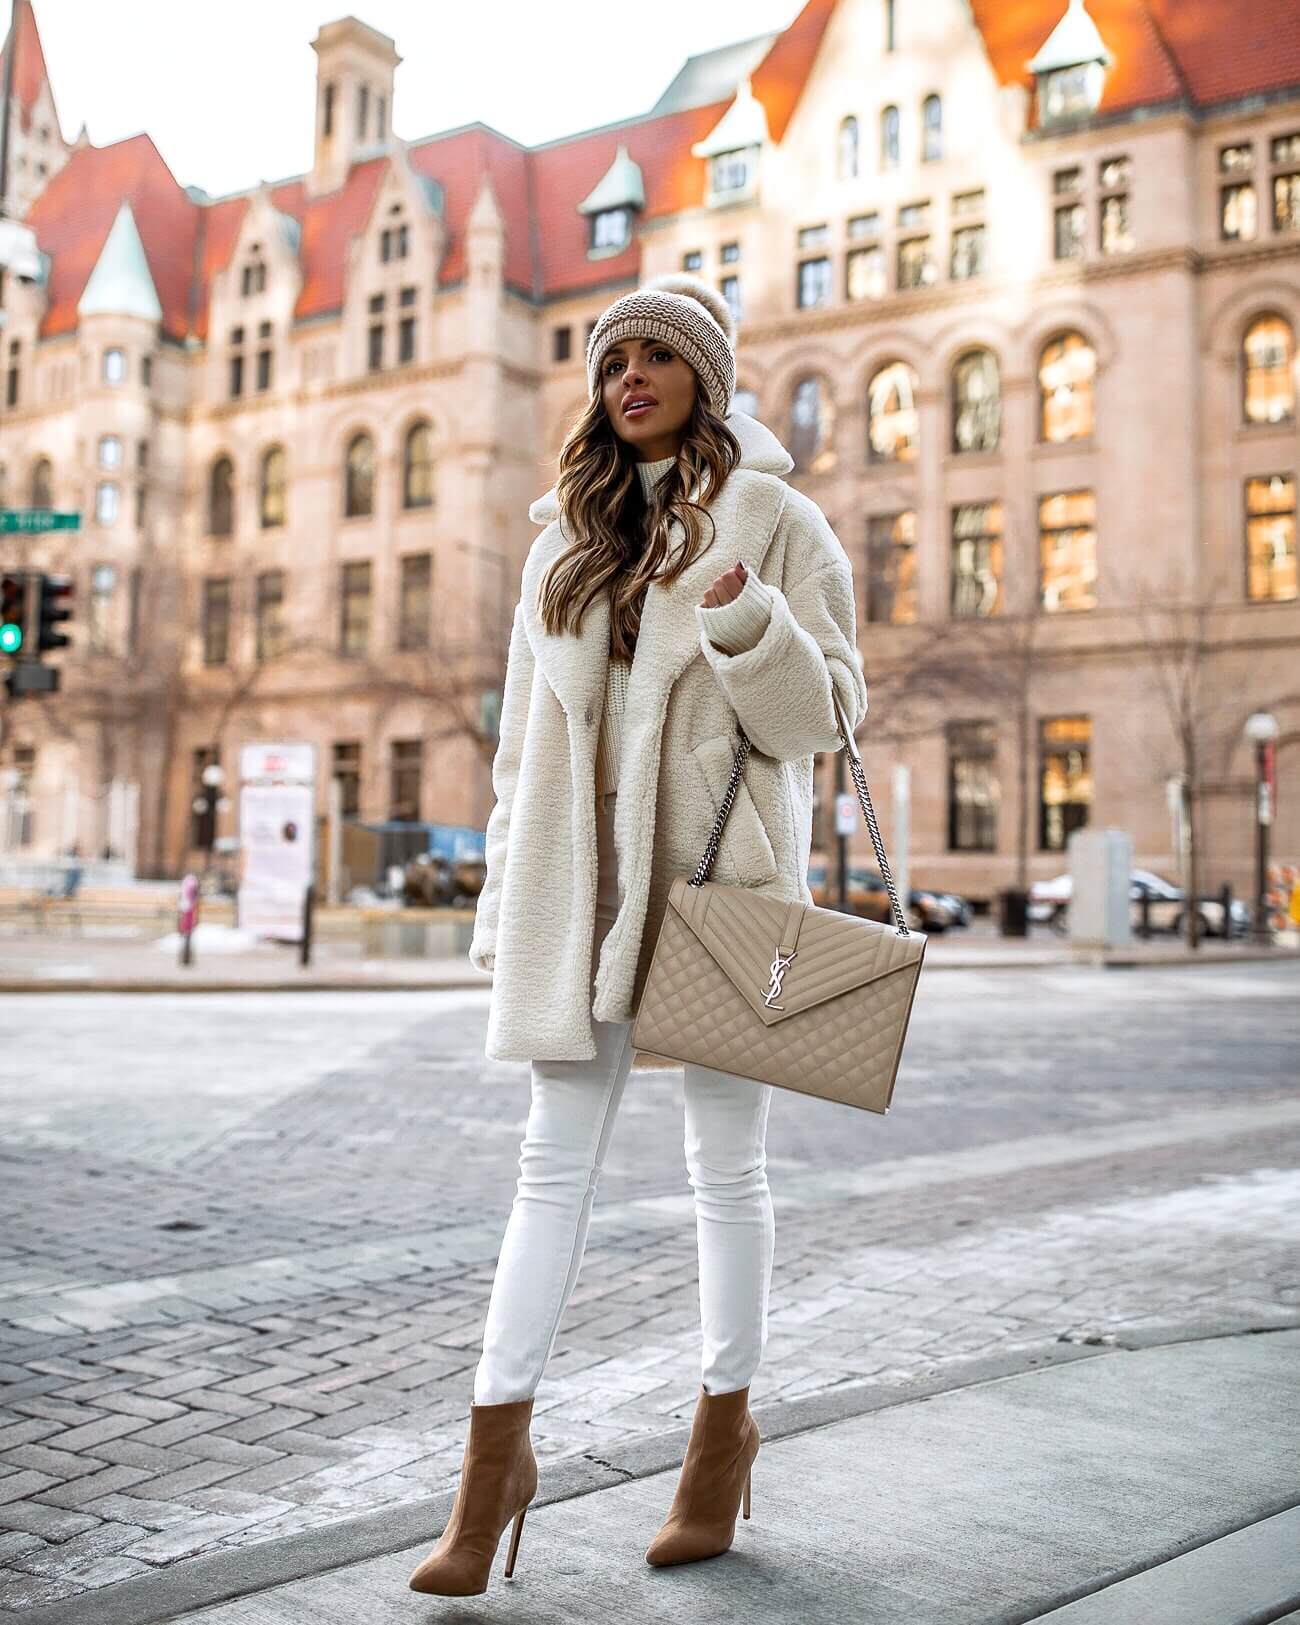 fashion blogger mia mia mine wearing a white teddy bear coat from H&M